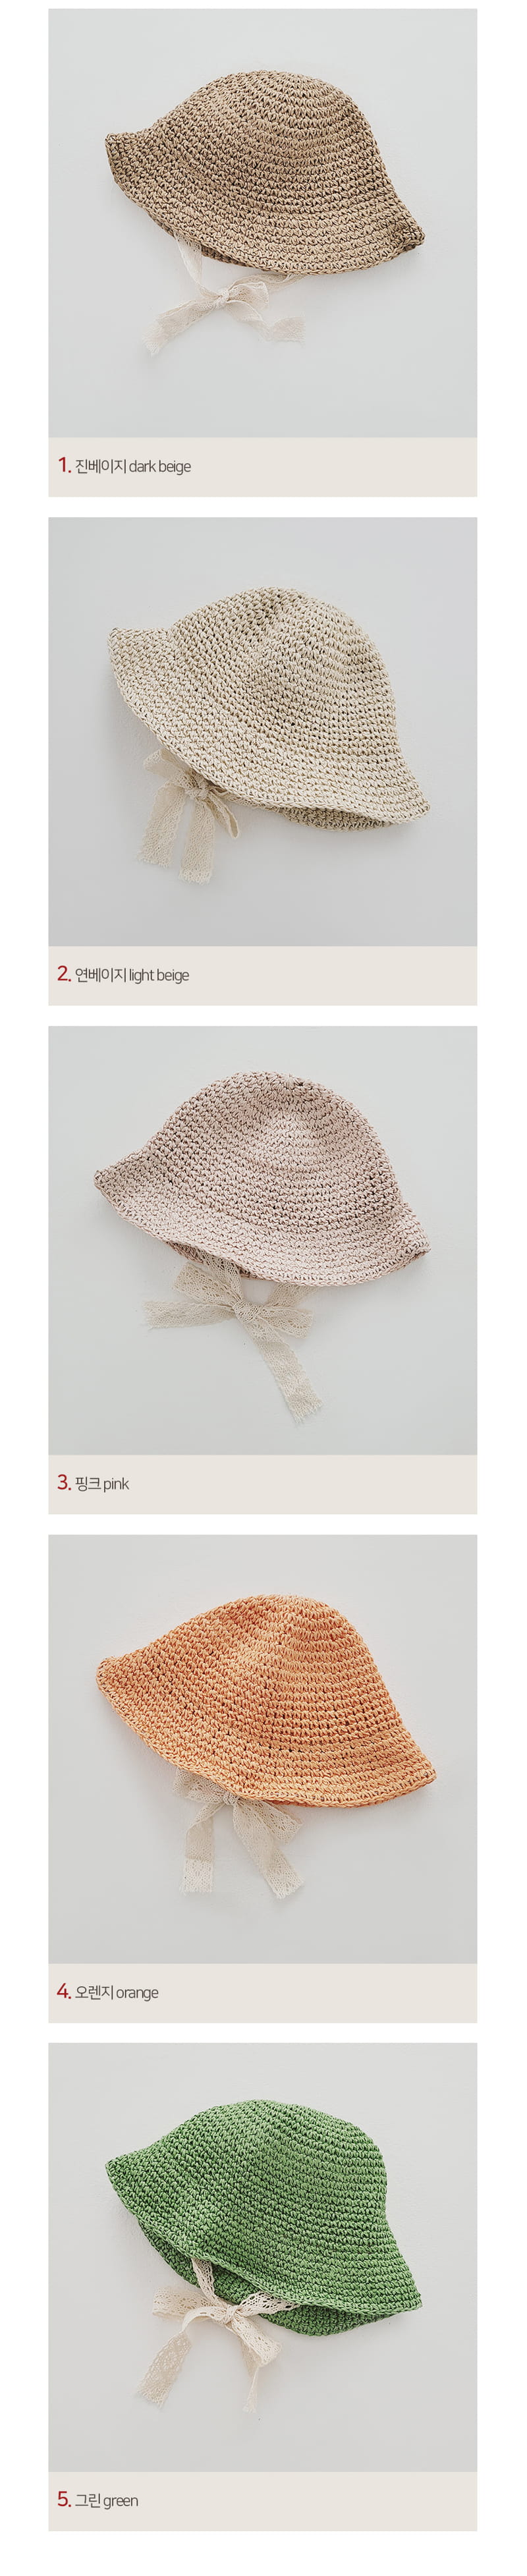 Daily Daily - Korean Children Fashion - #todddlerfashion - Jisa Lace Bucket Hat - 3